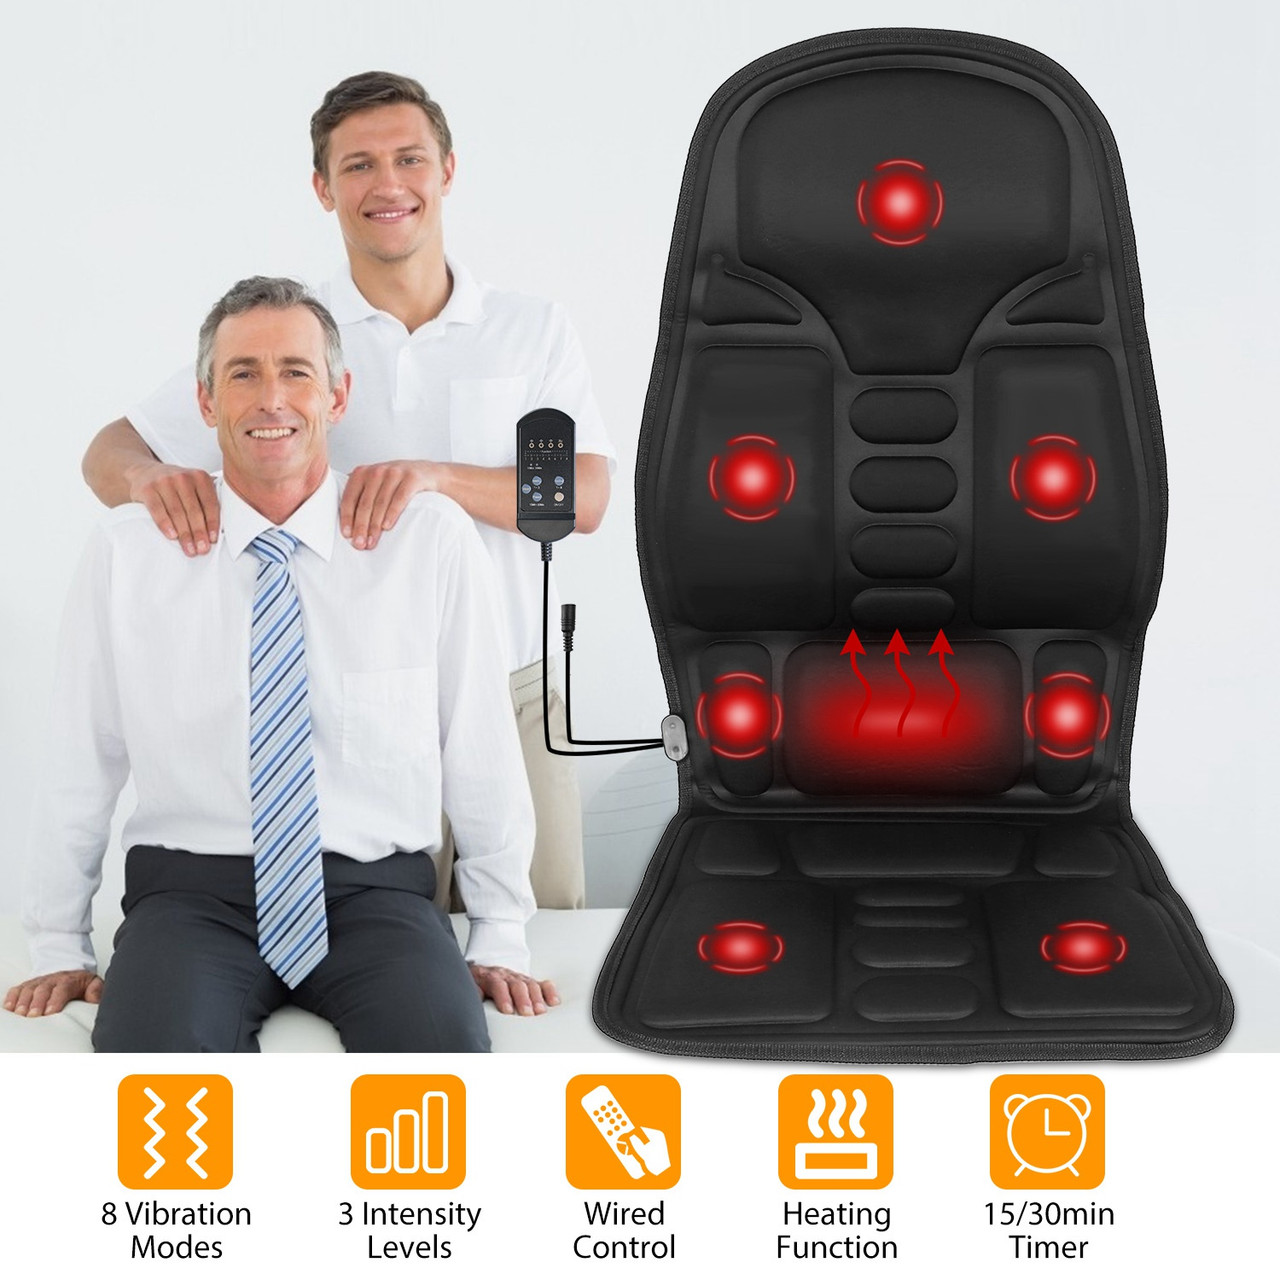 Massage Car Seat Cushion with Heat product image